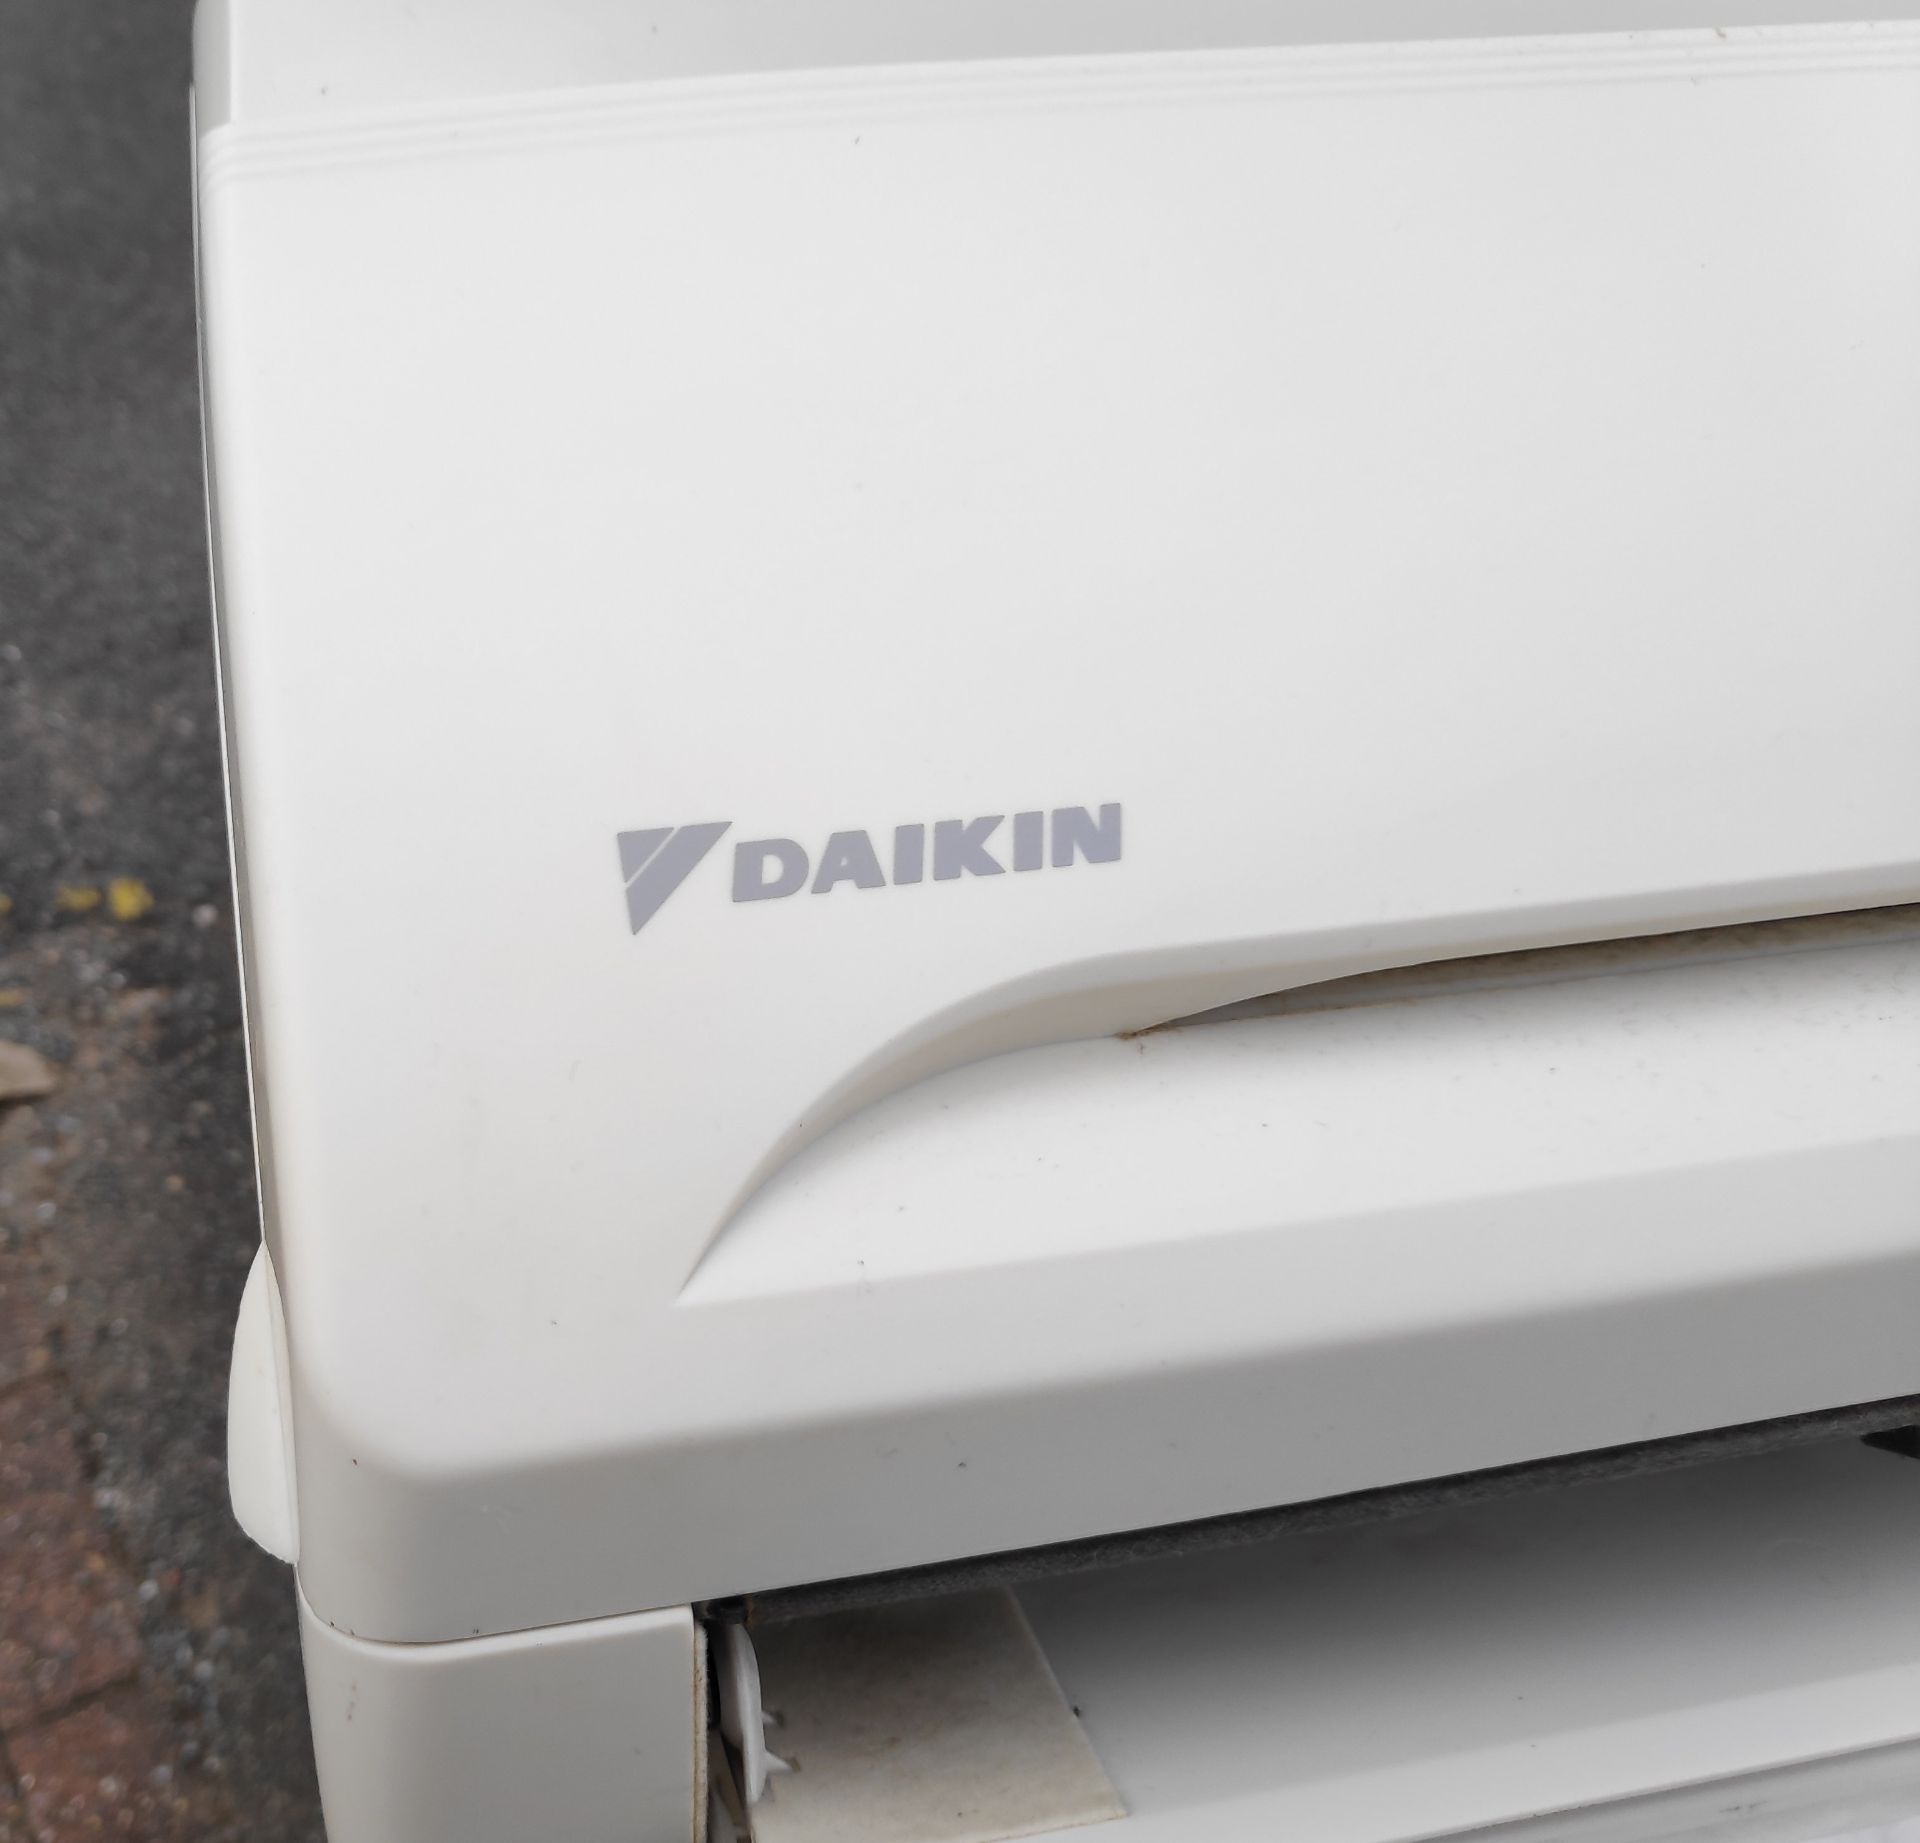 1 x Daikin Wall Mounted Air Conditioner Indoor Unit - Model FXAQ50PAV1 - JMCS115 - CL723 - - Image 3 of 7